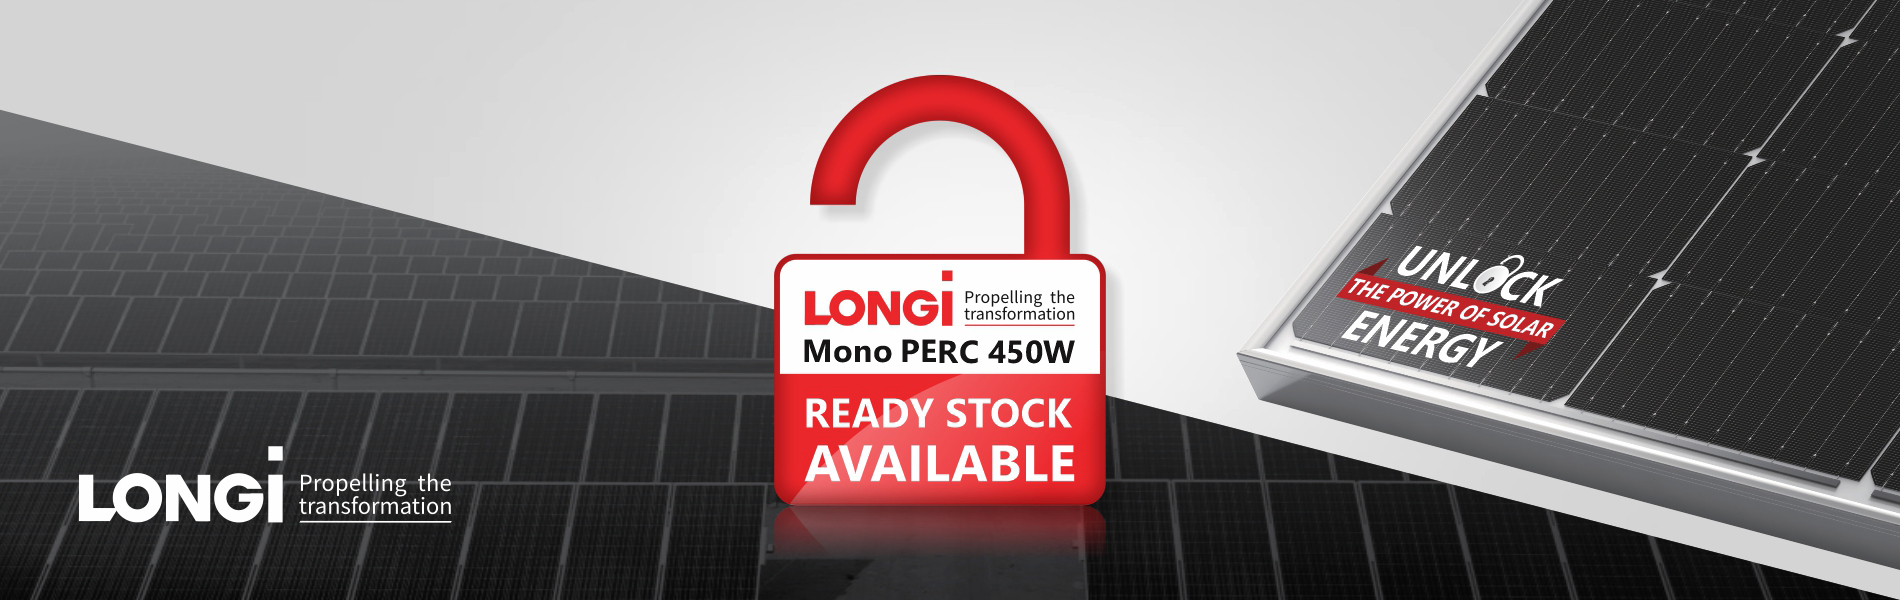 Comprar panel solar 450W Mono PERC LONGI